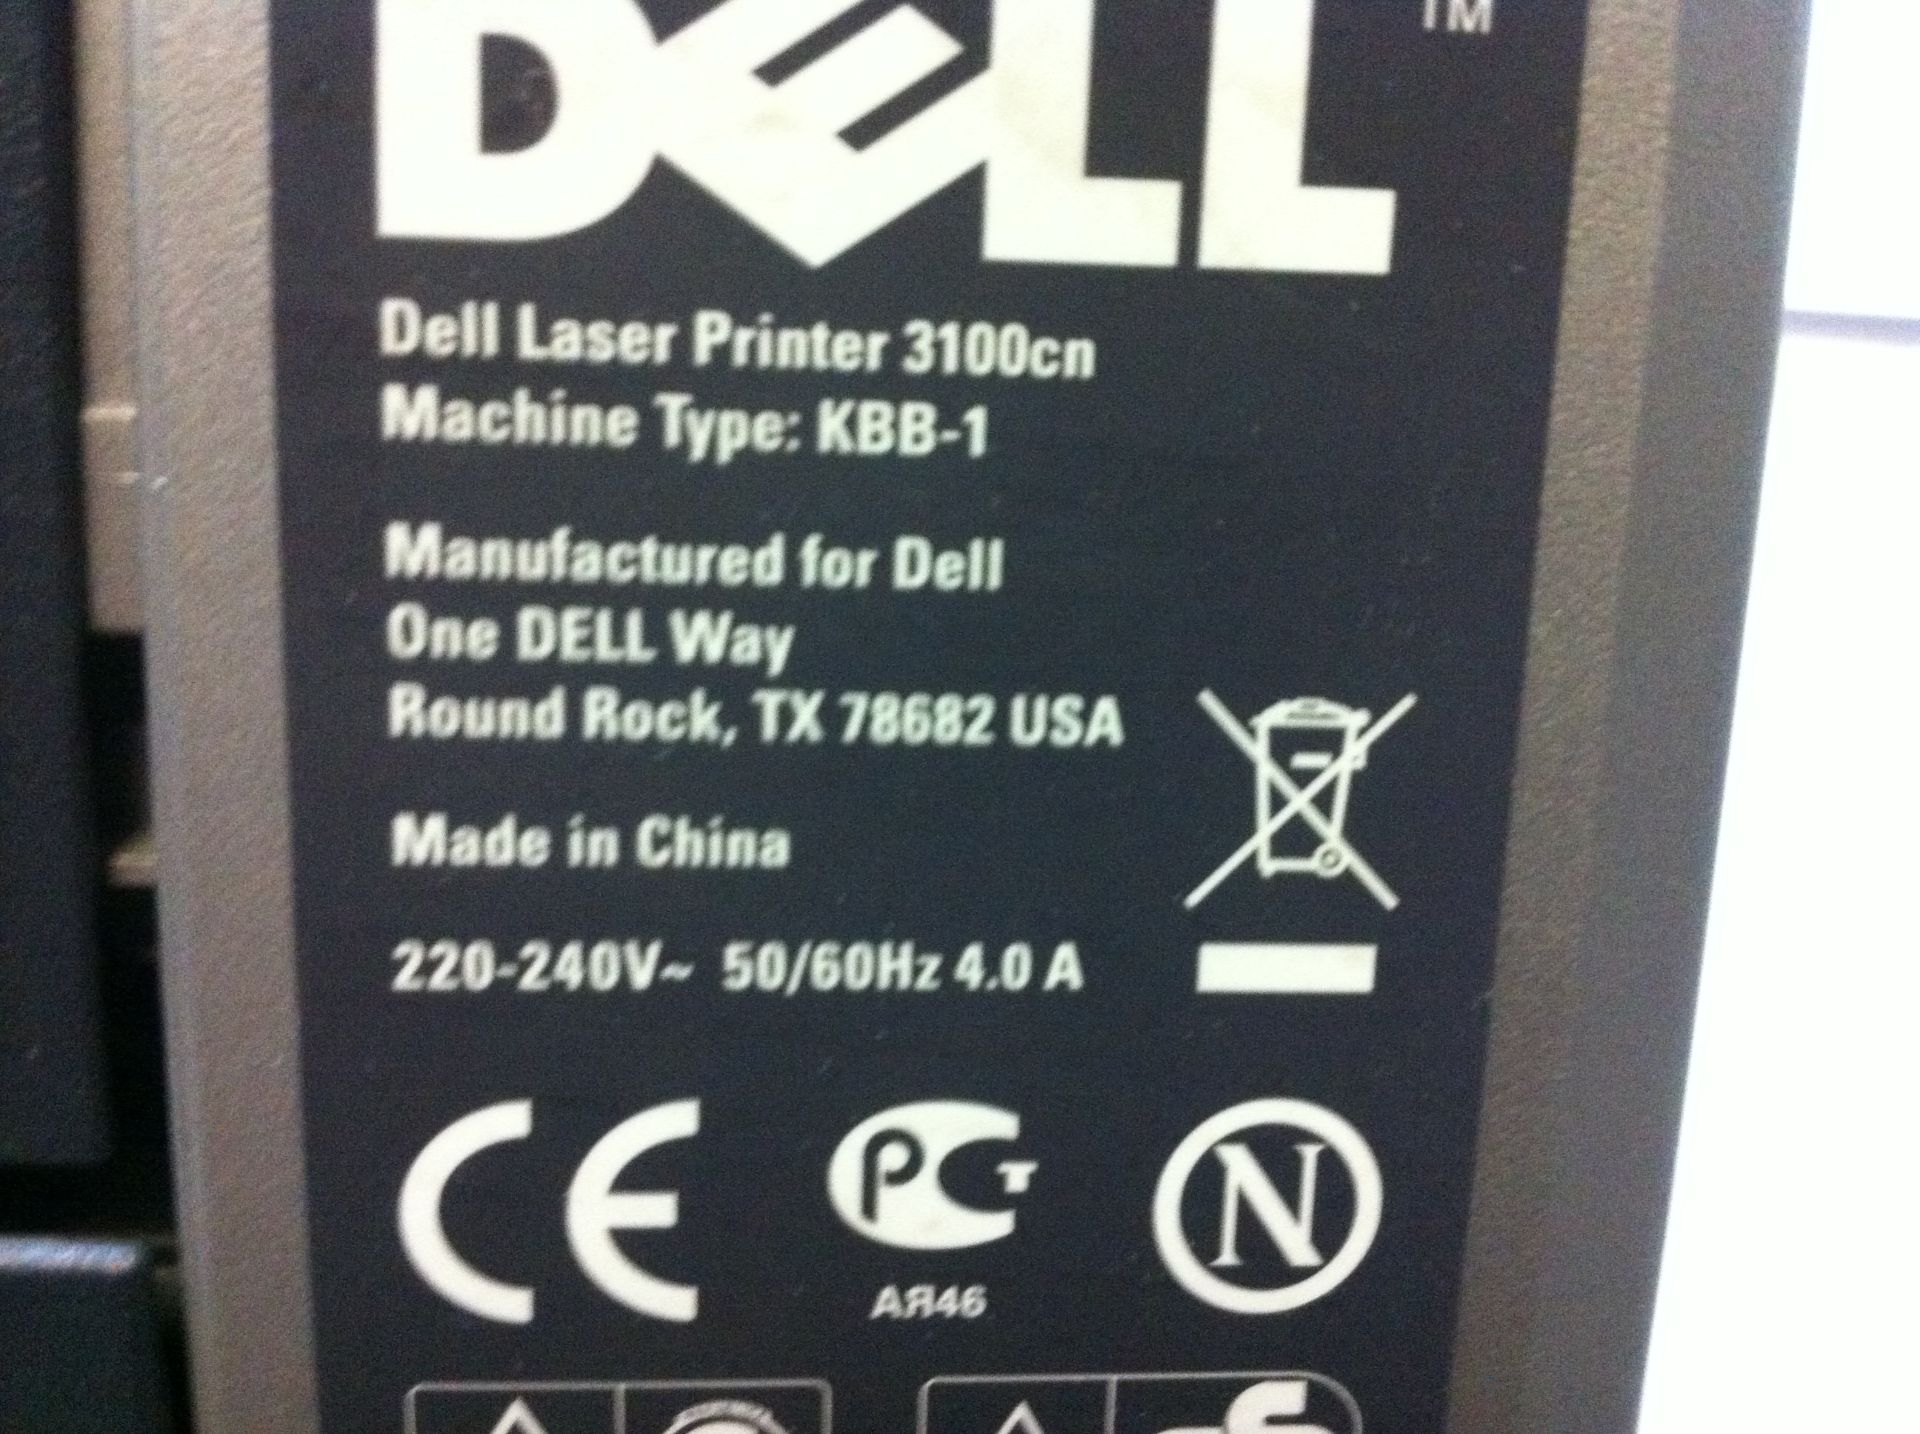 Dell 3100 cn colour laser printer - Image 3 of 3